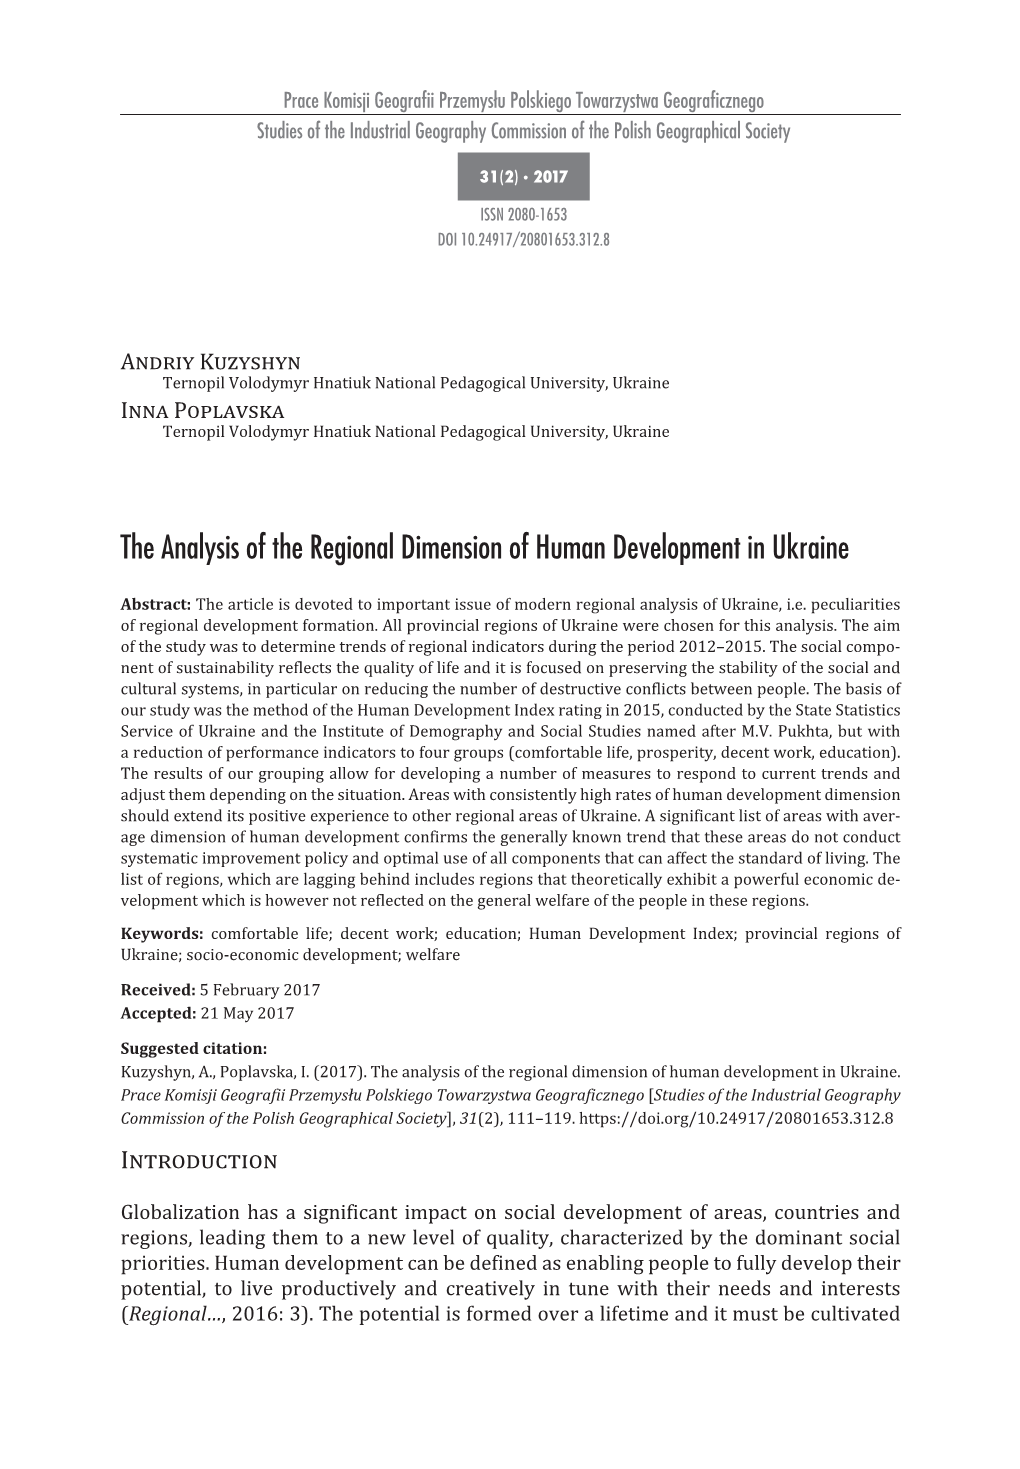 The Analysis of the Regional Dimension of Human Development in Ukraine